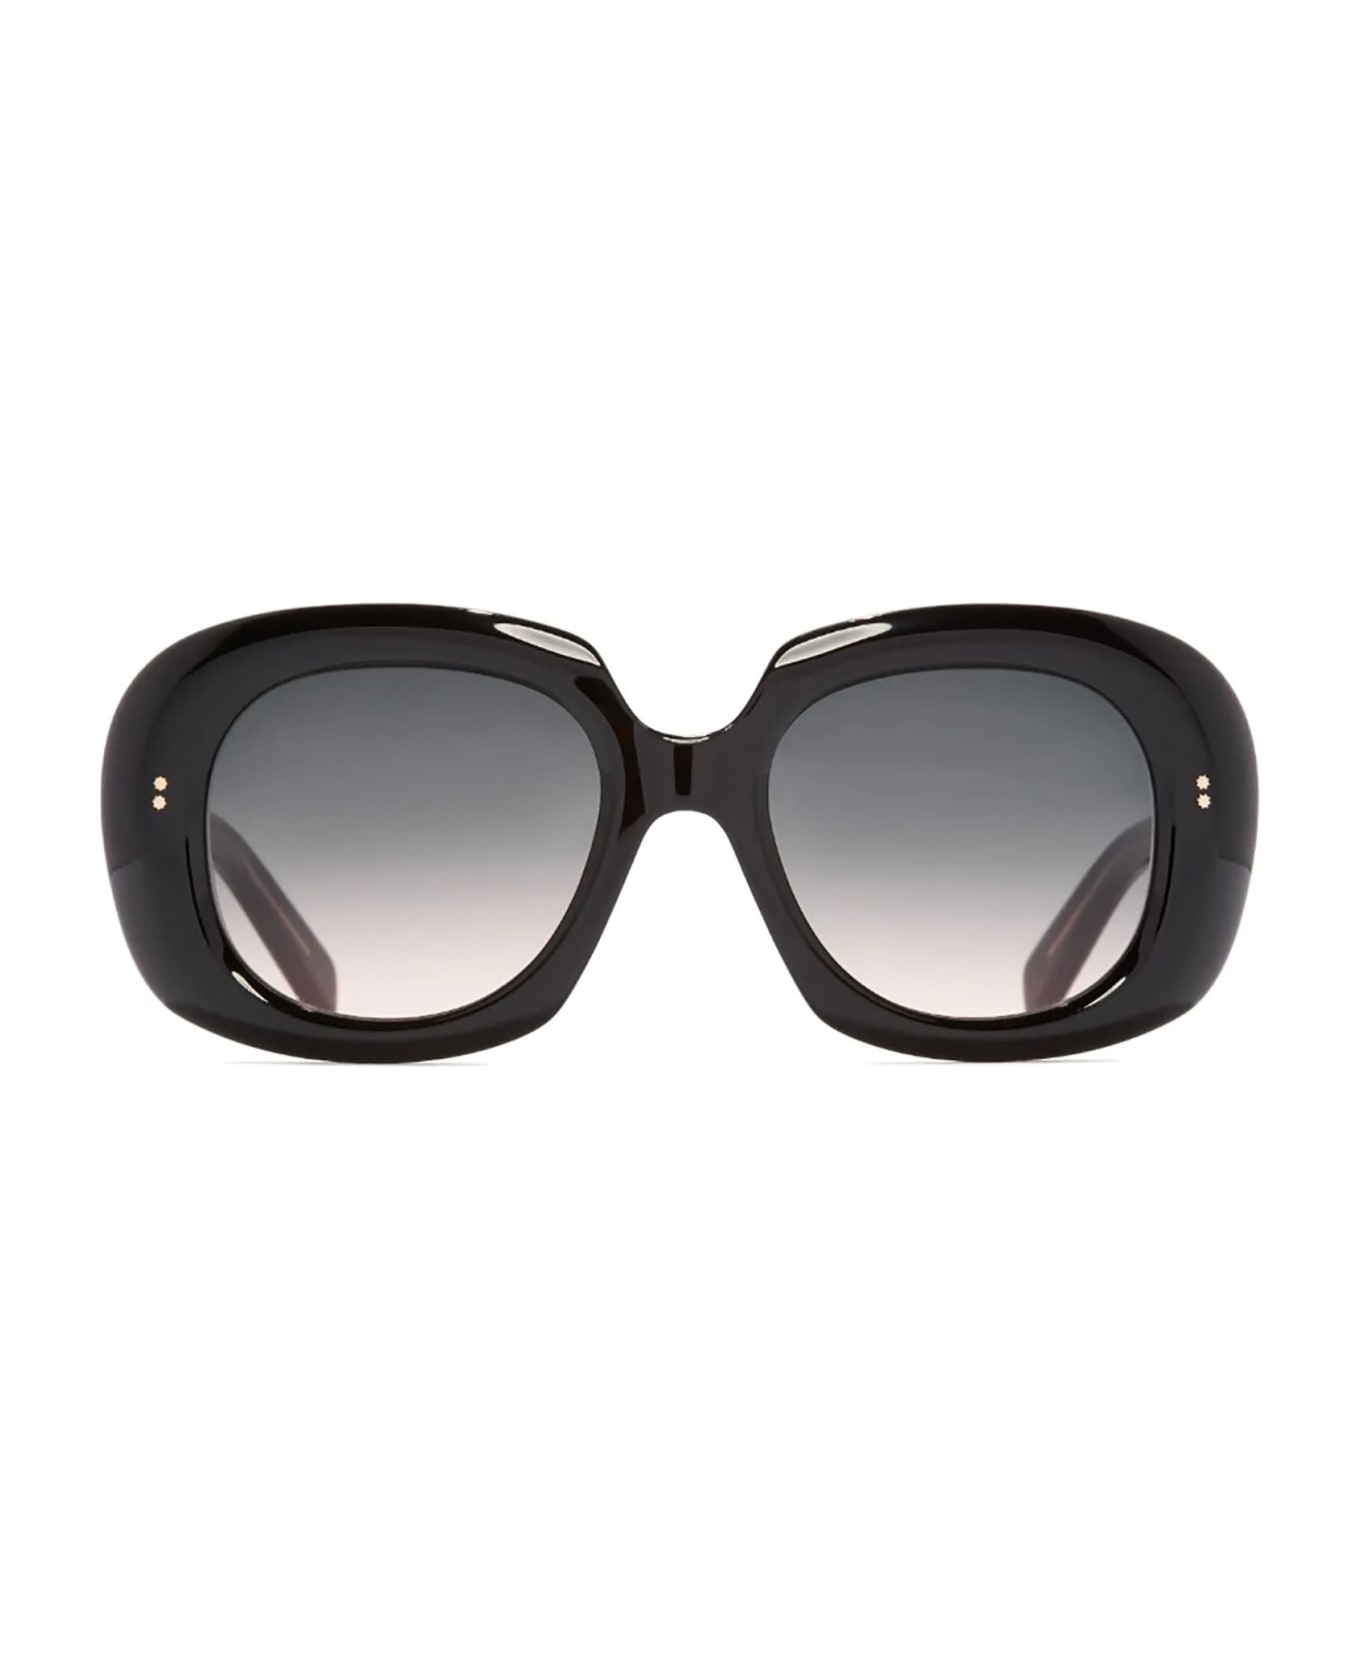 Cutler and Gross 9383 Sunglasses - Black サングラス